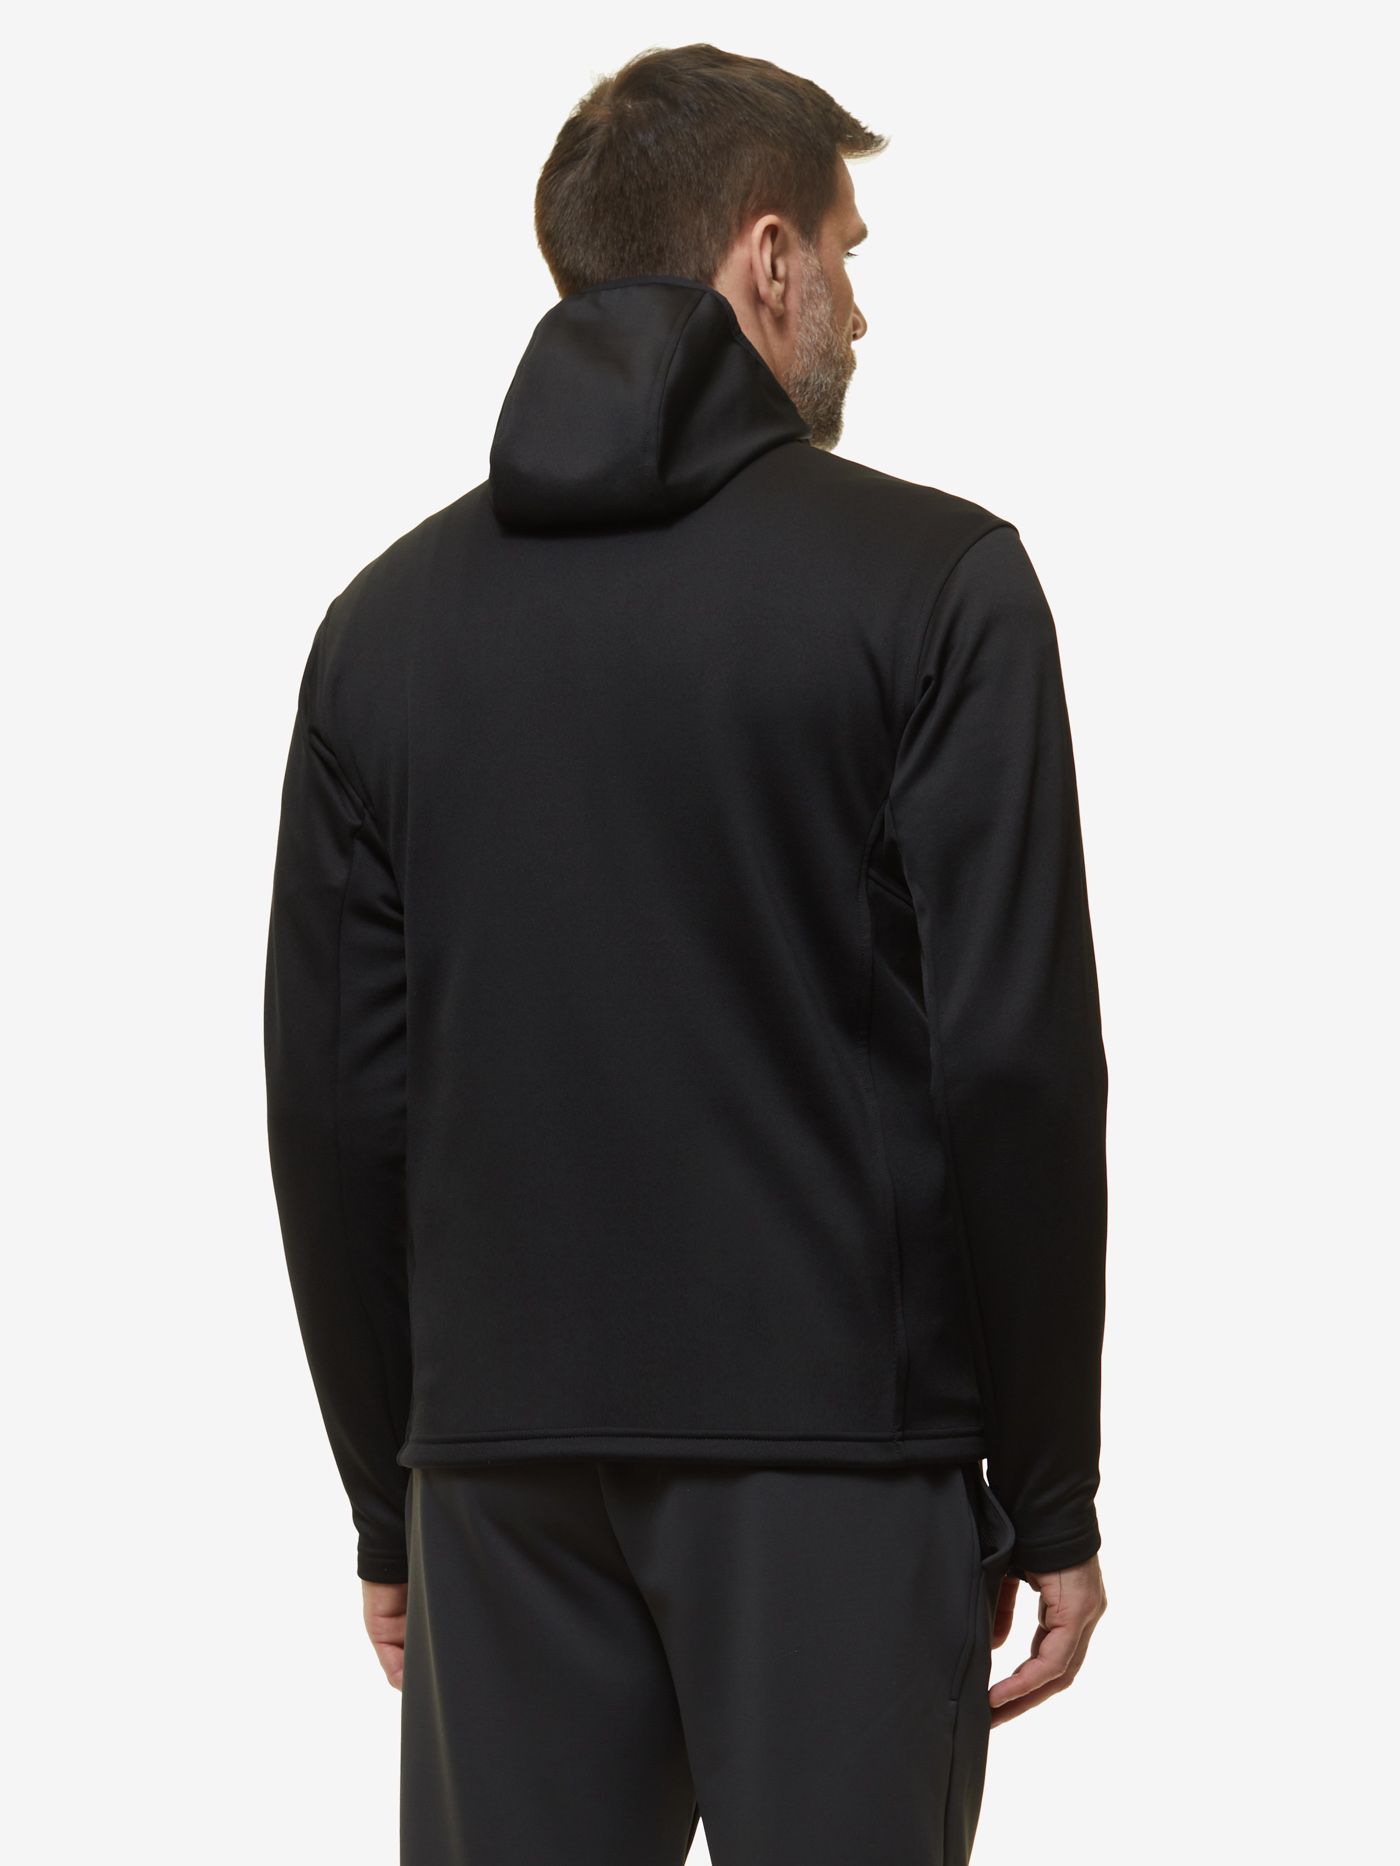 Куртка BASK, размер 46, цвет черный 1246V2-9009-046 Champion v2 - фото 4